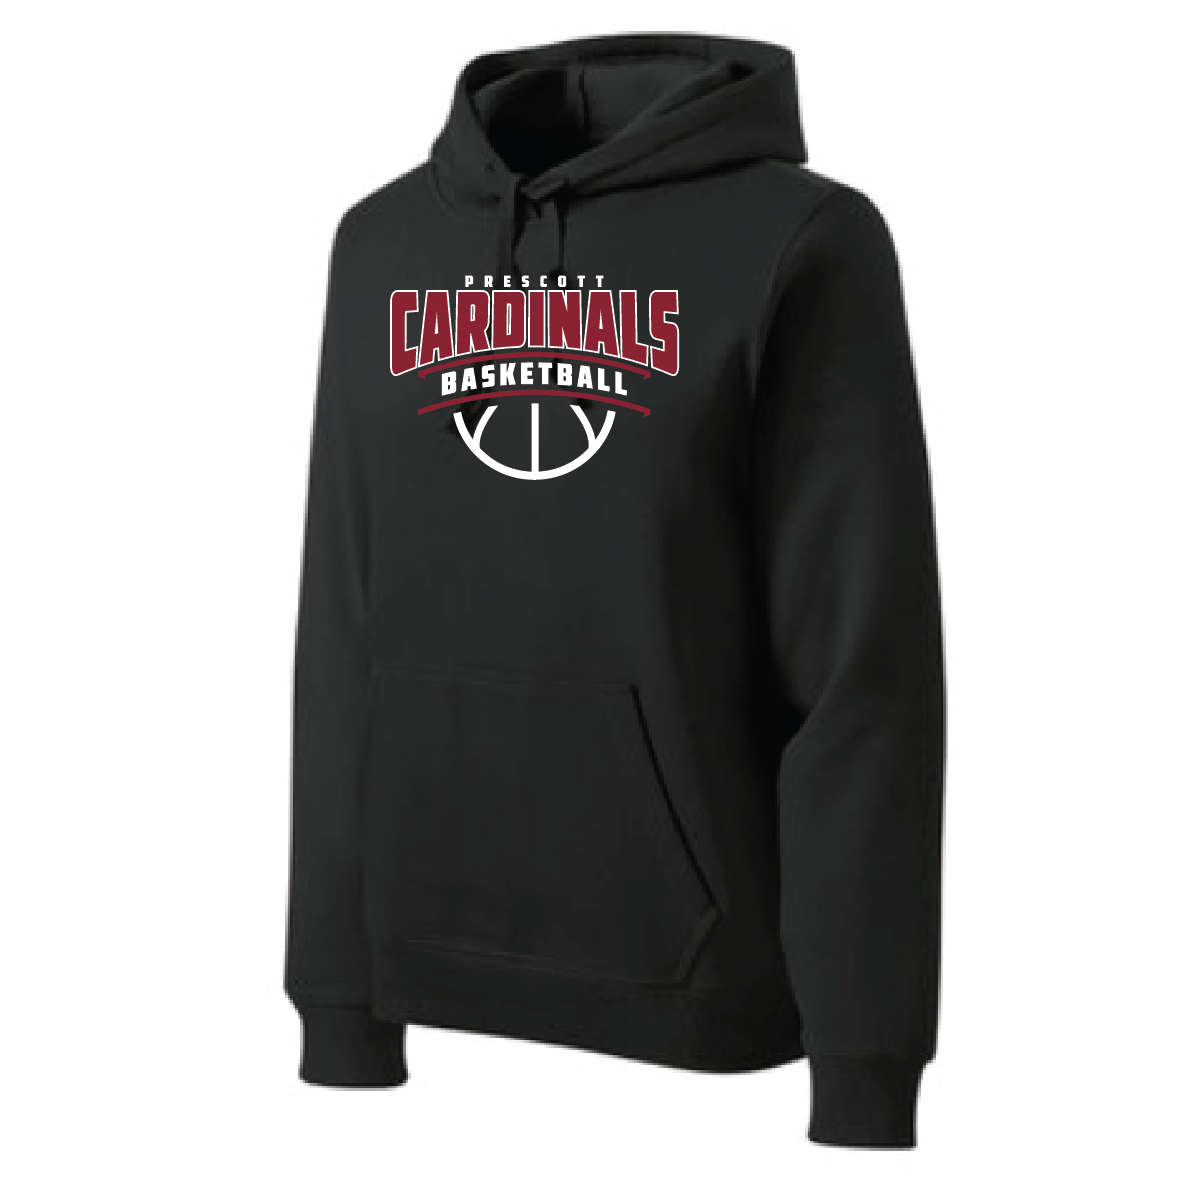 Prescott Retail Online Girls Basketball Sweatshirt